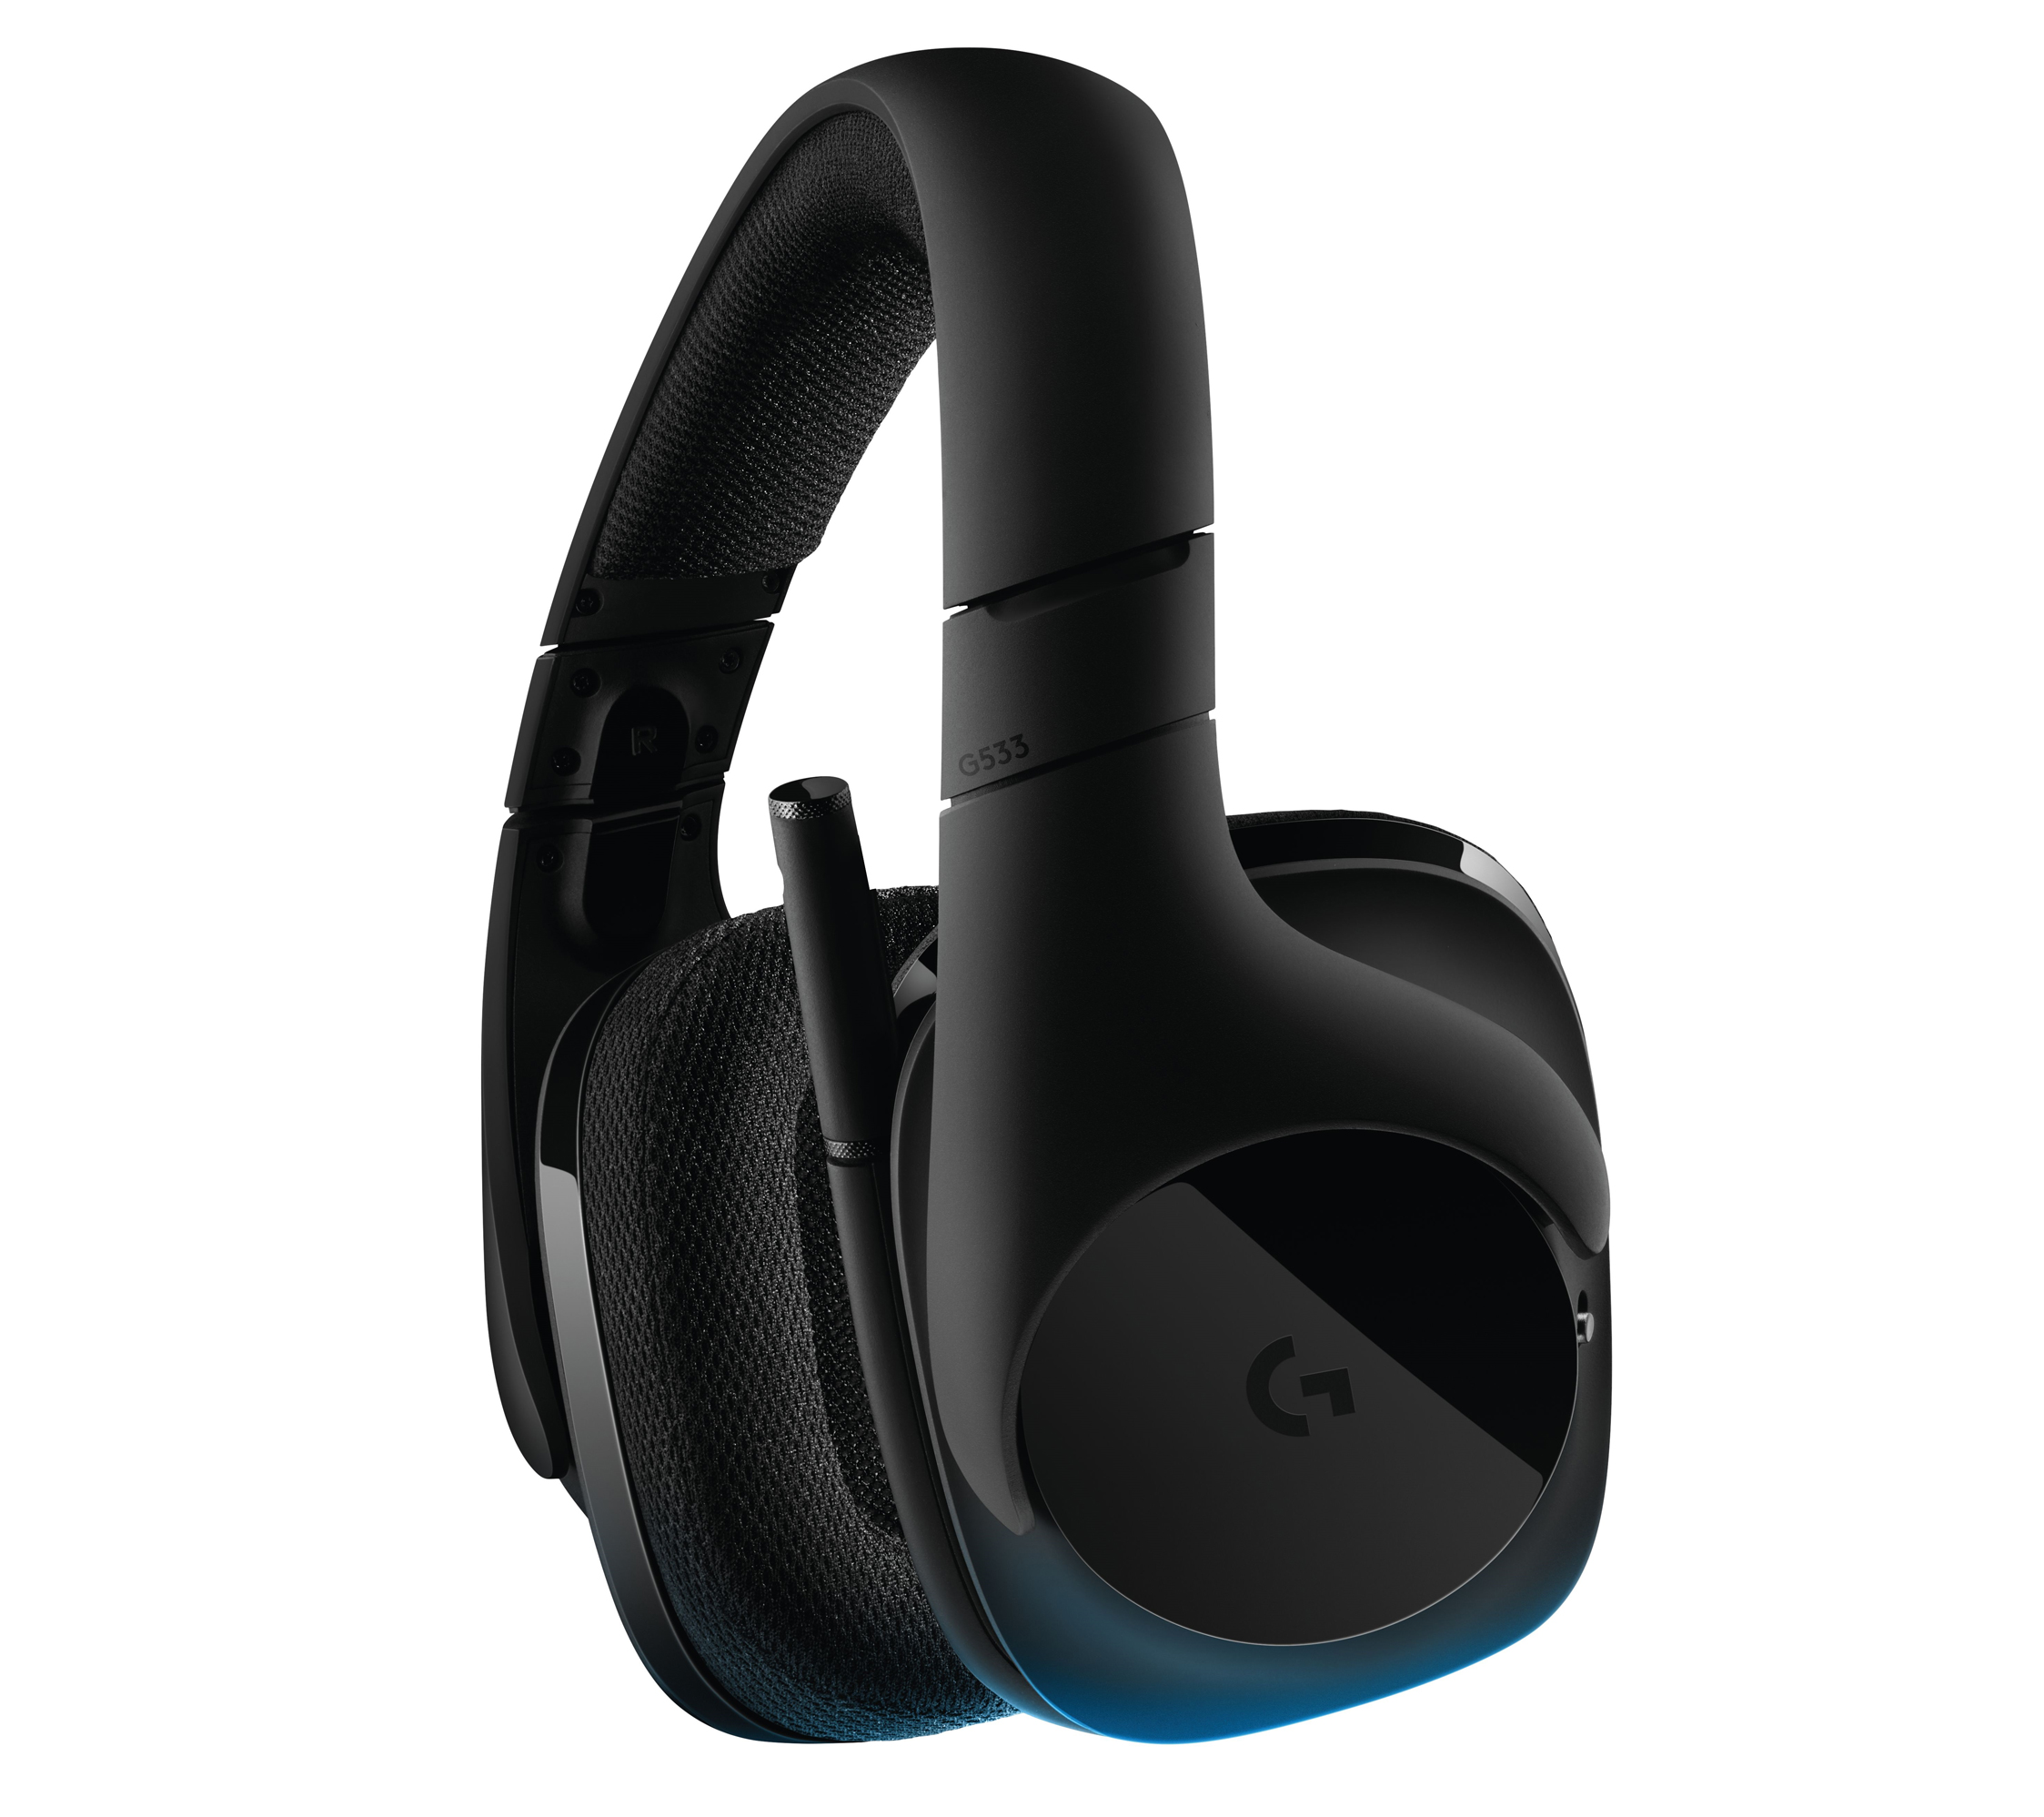 Logitech G533 Wireless Gaming DTS Headphone: X Headset Review